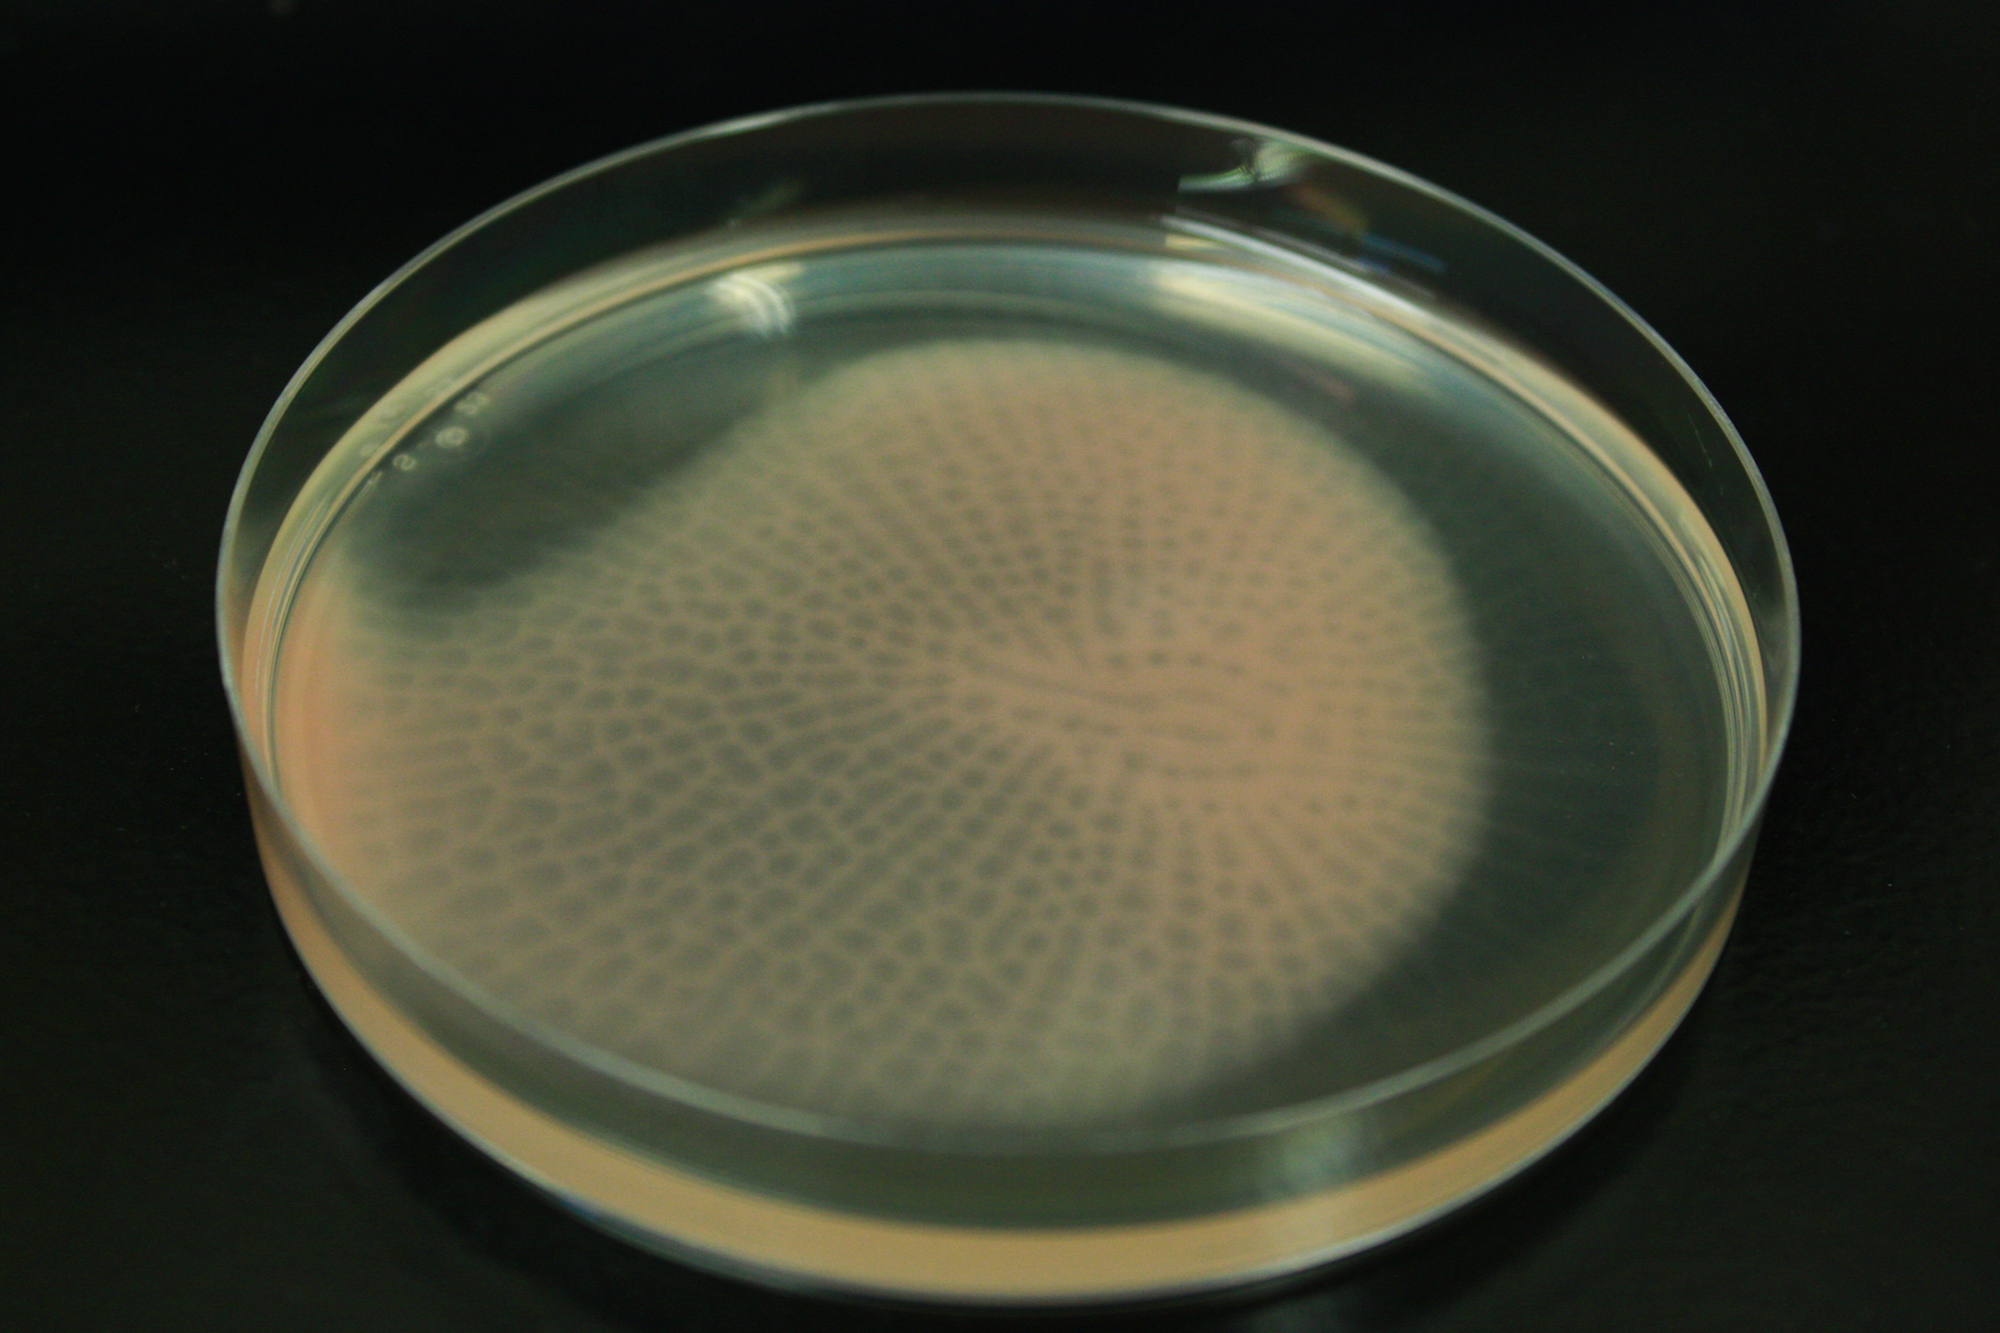 Petri dish with a honeycomb-like growth